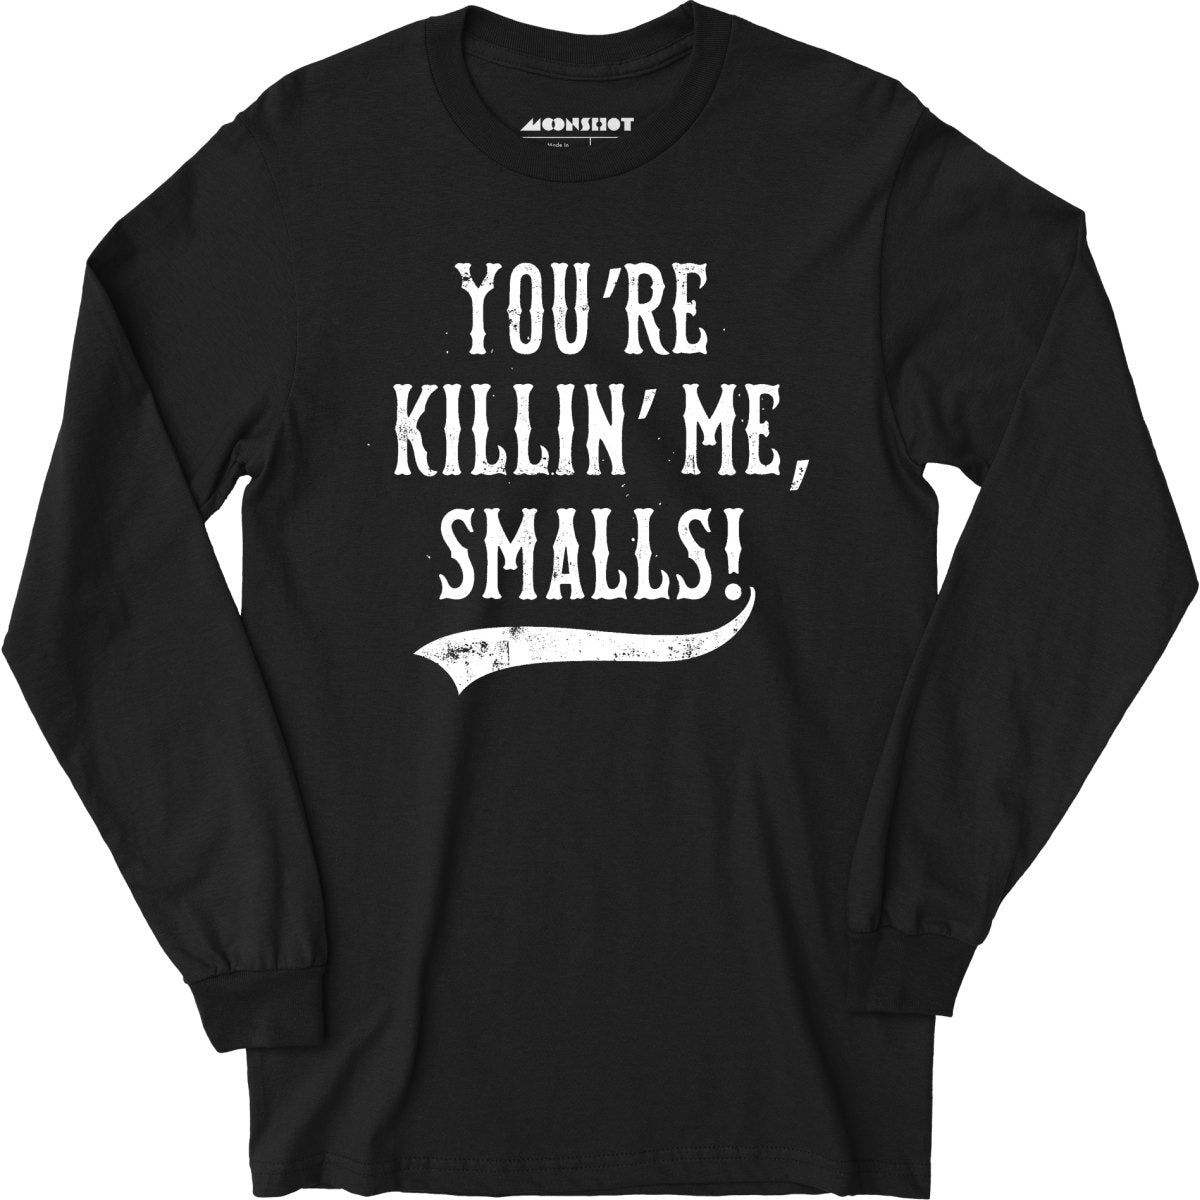 You're Killin' Me, Smalls! - Long Sleeve T-Shirt